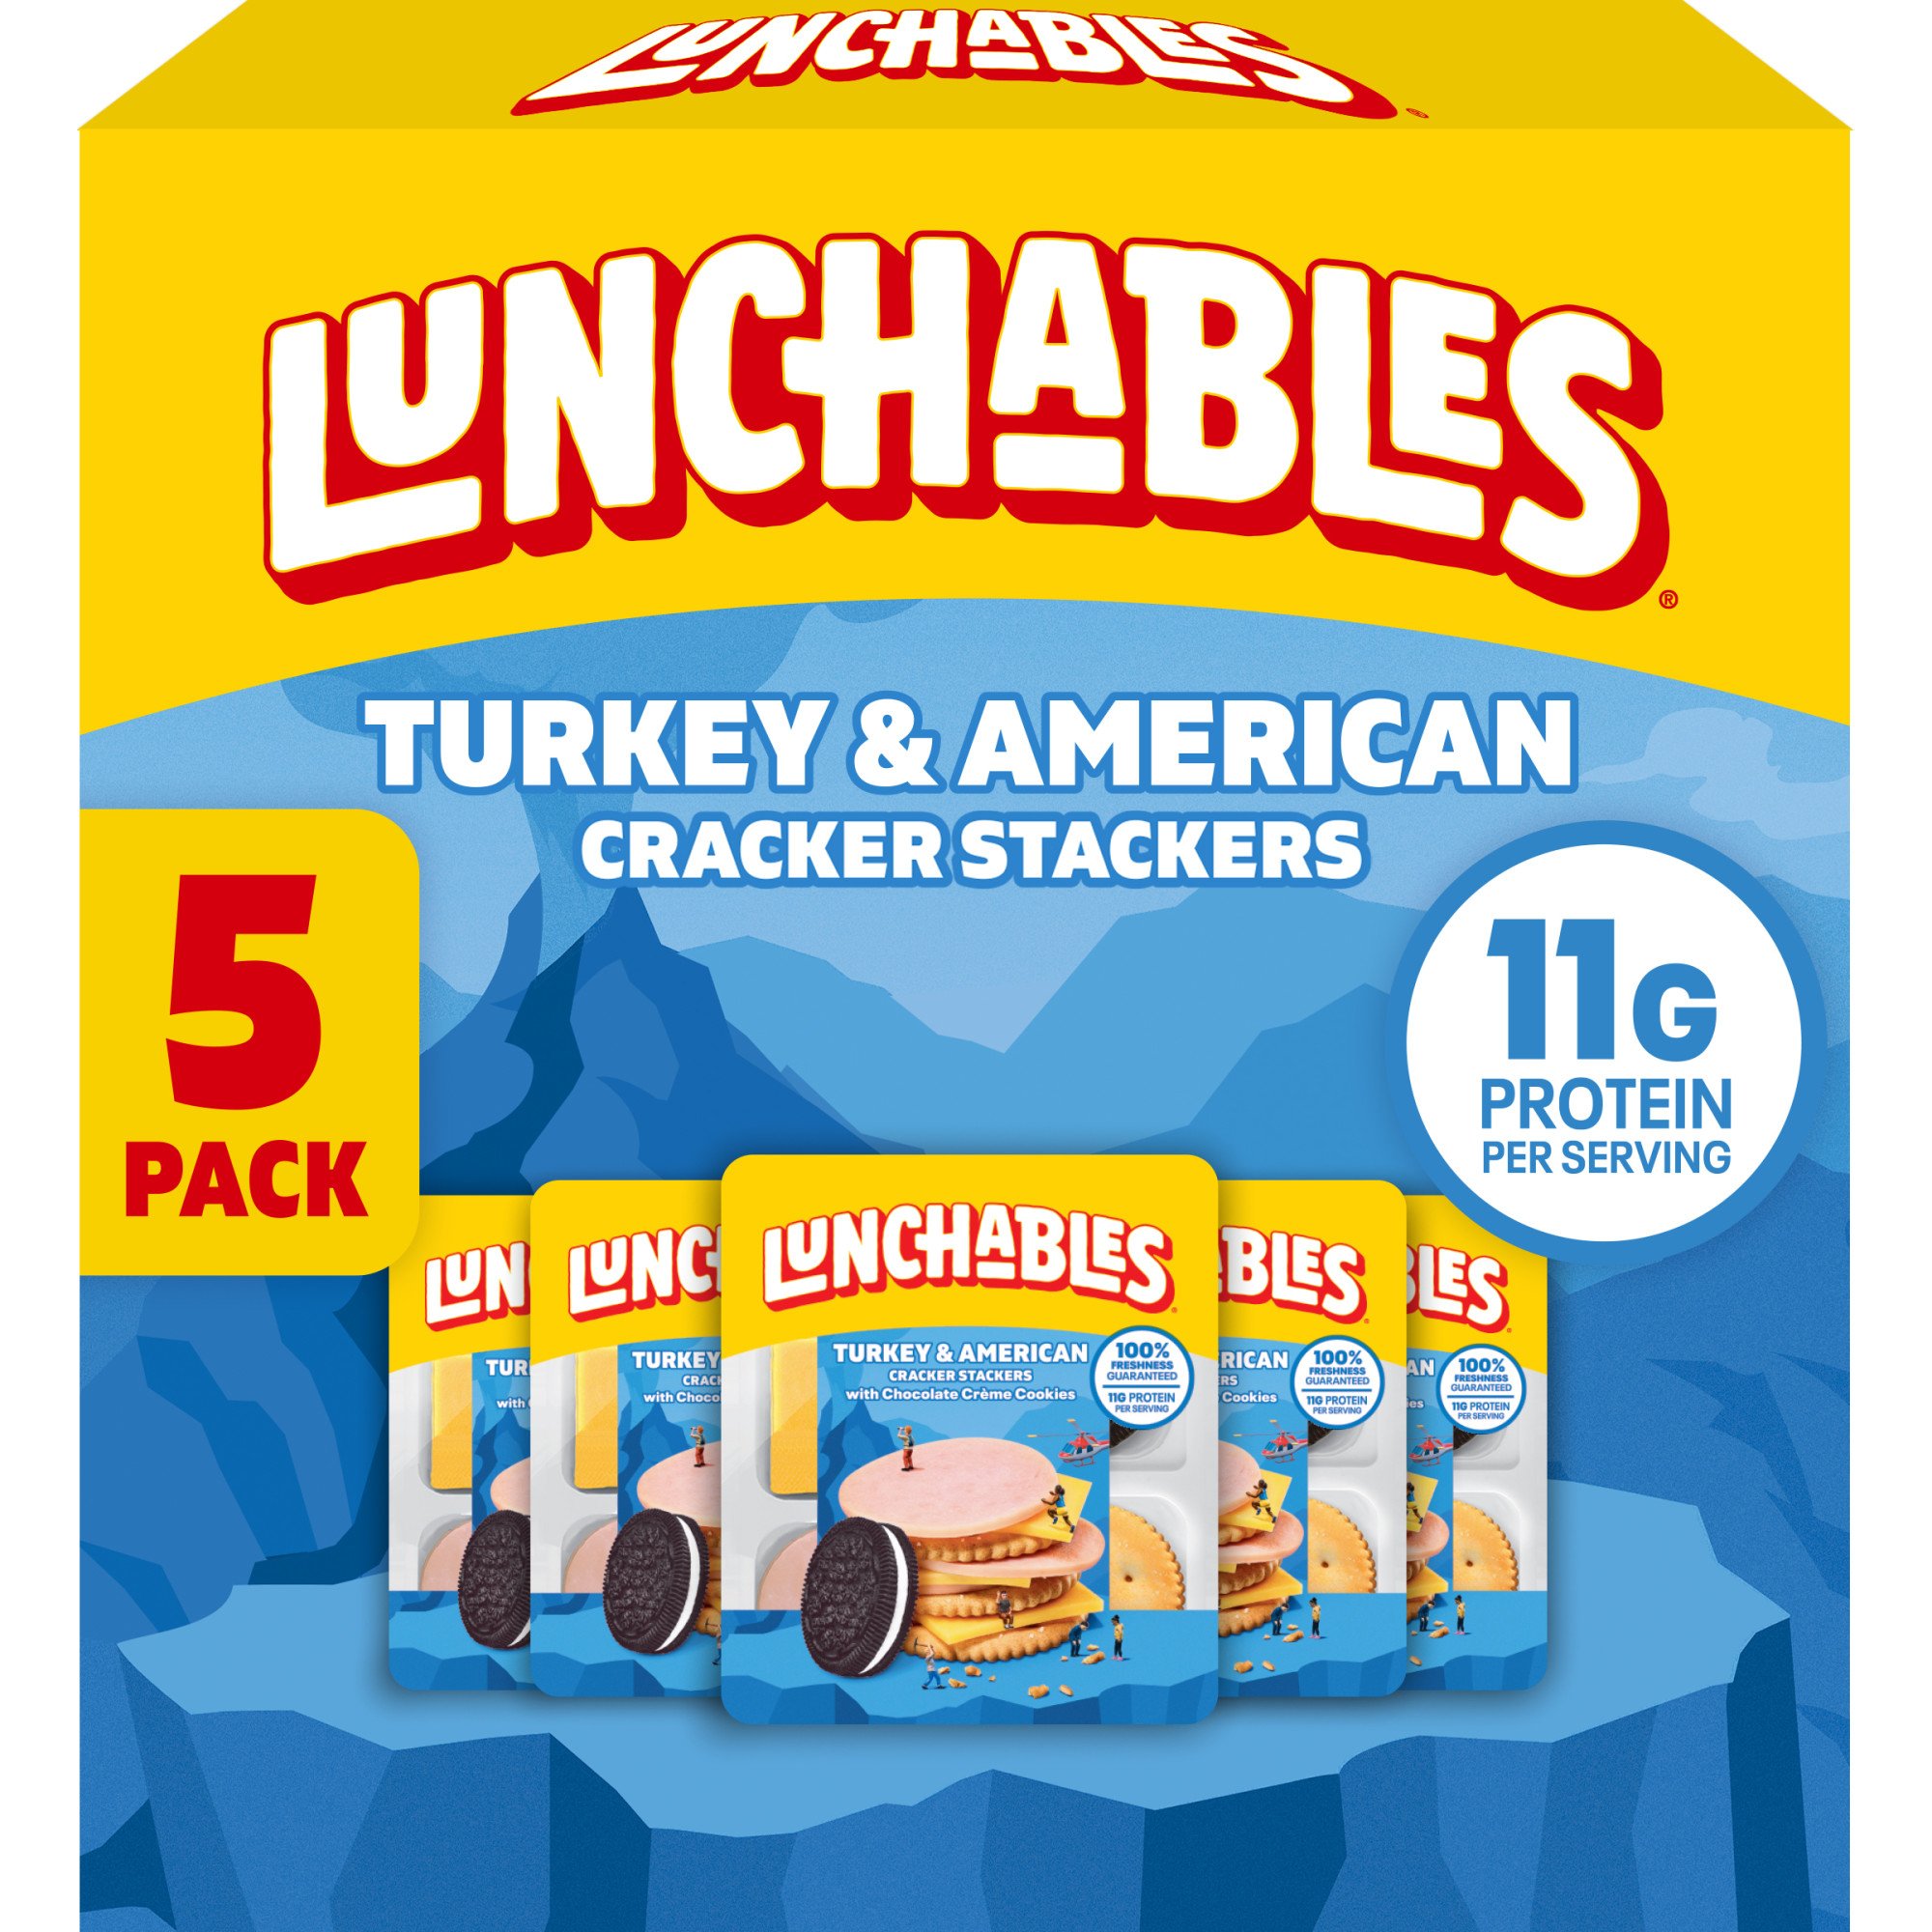 Homemade Lunchables - The Cracker-Stacker